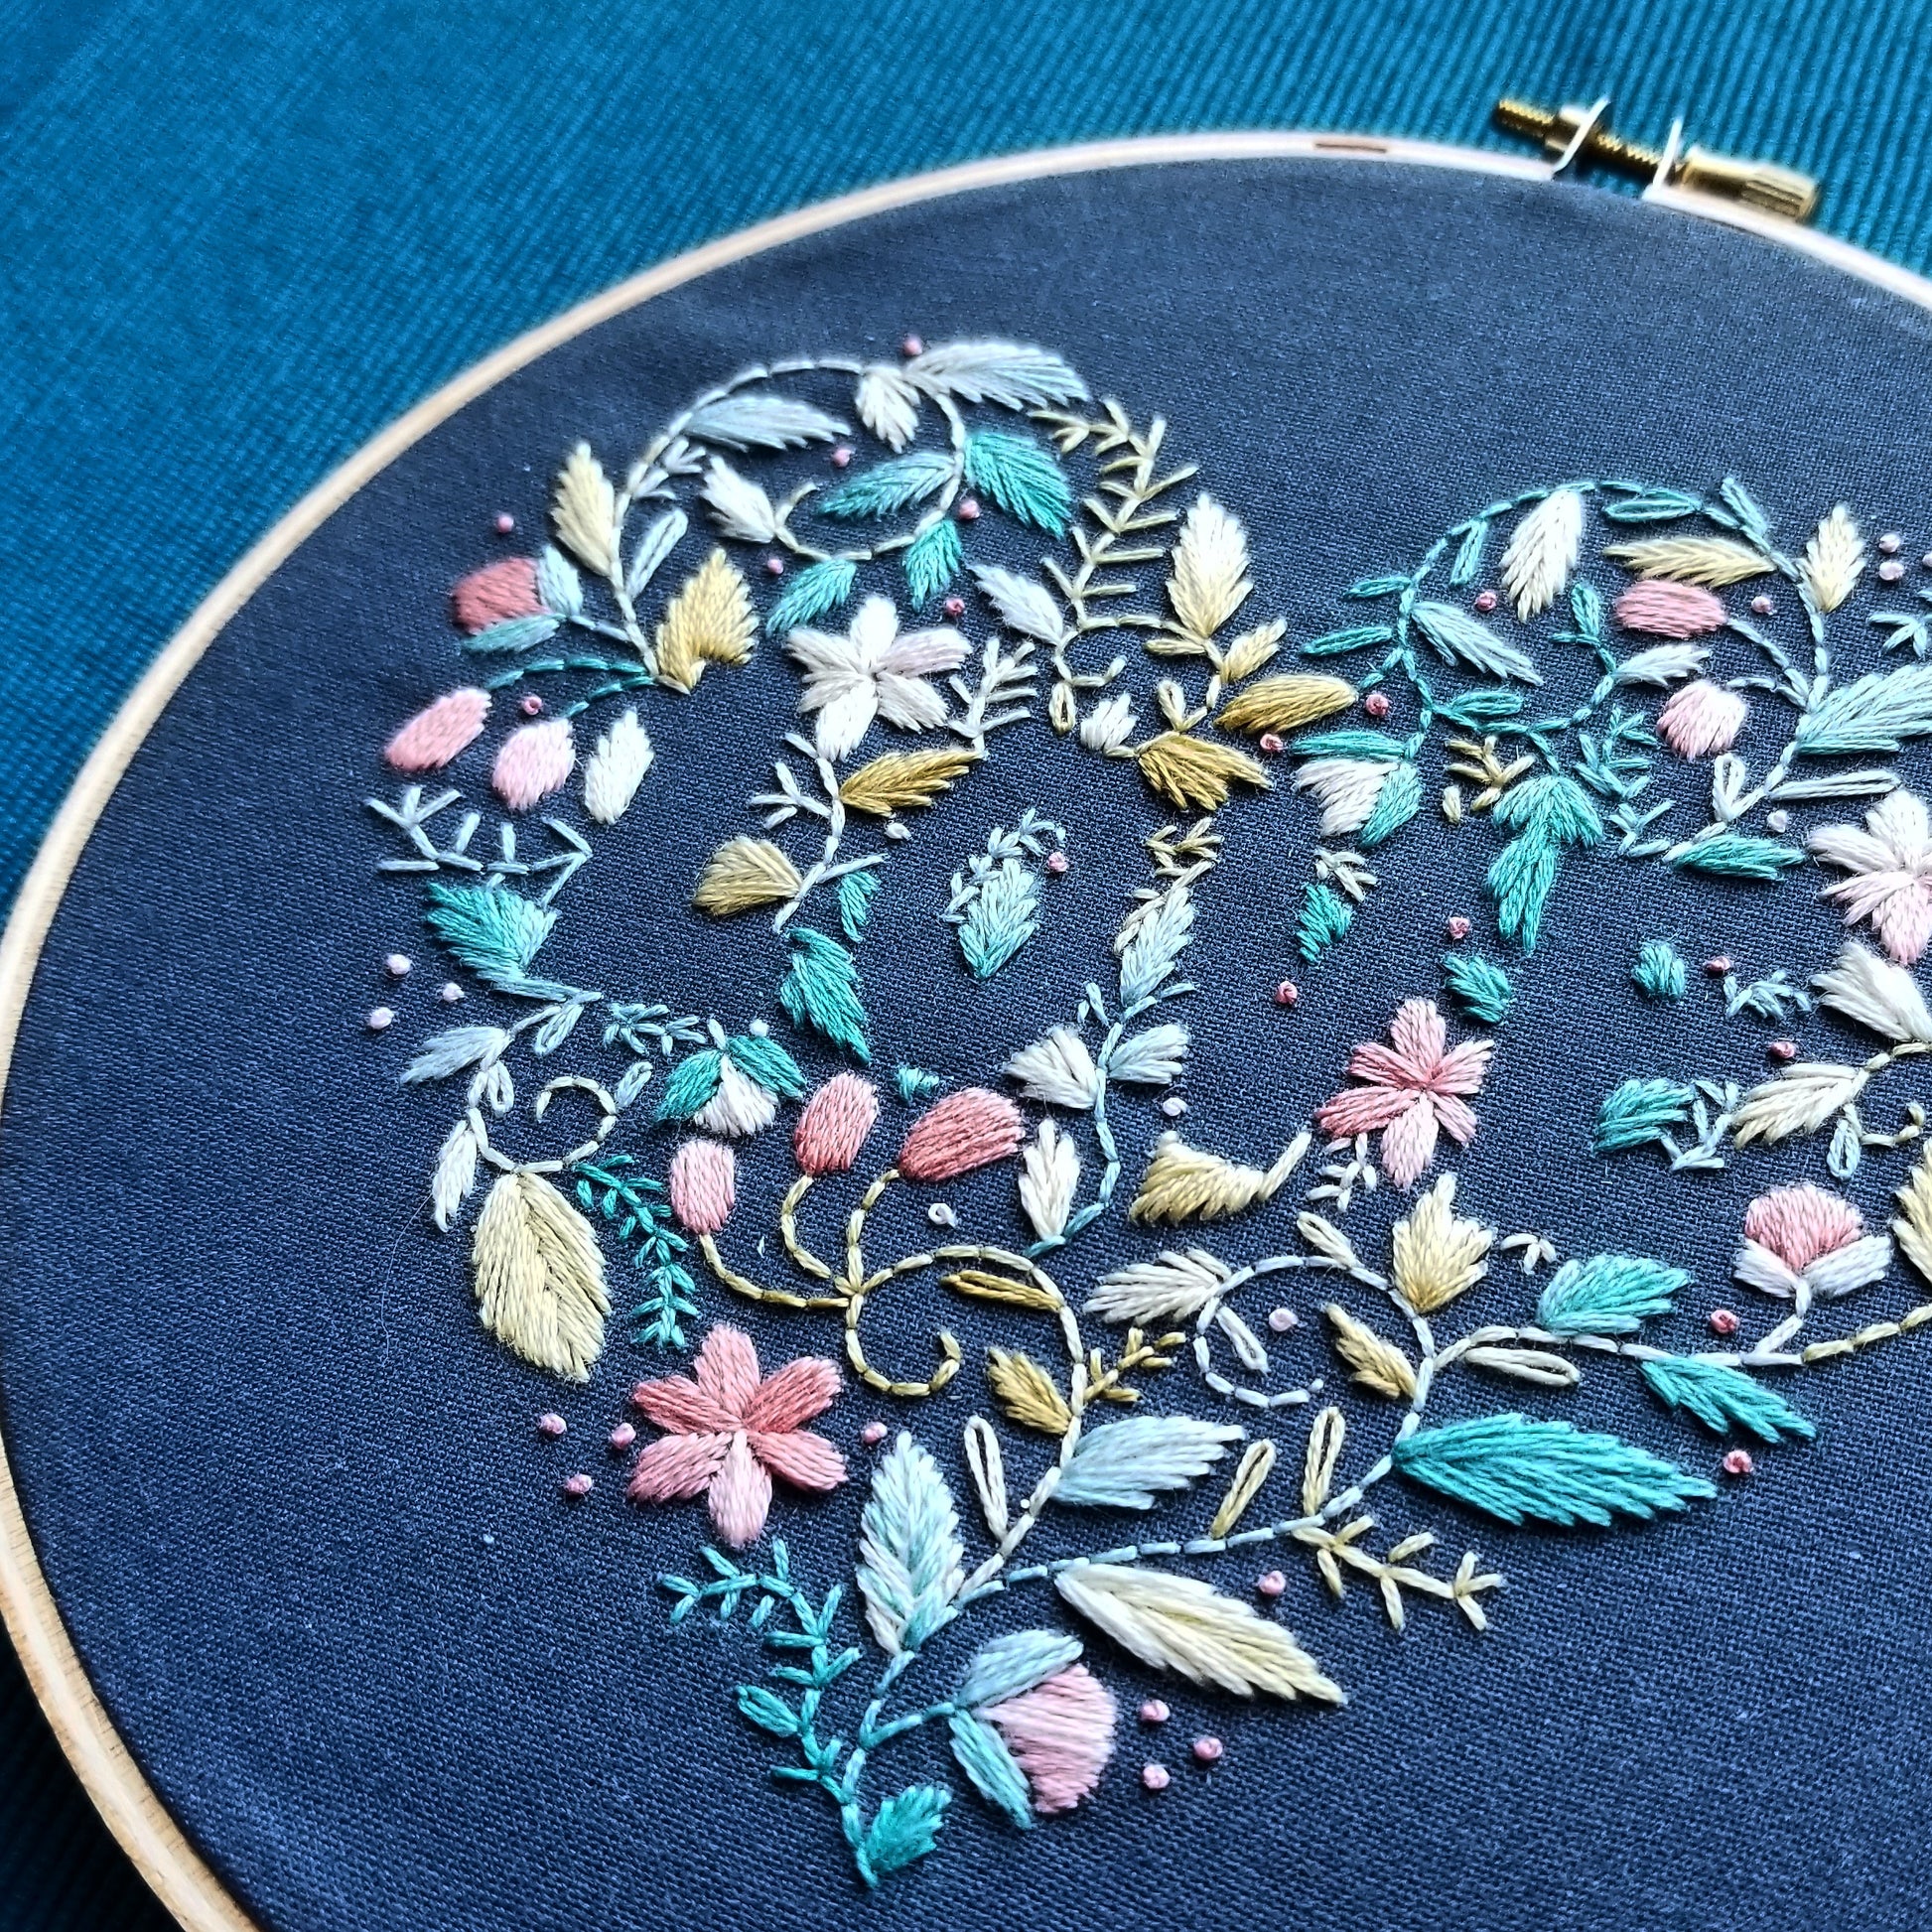 Stitched Up Kits - Australian Beginner Friendly Embroidery Kits